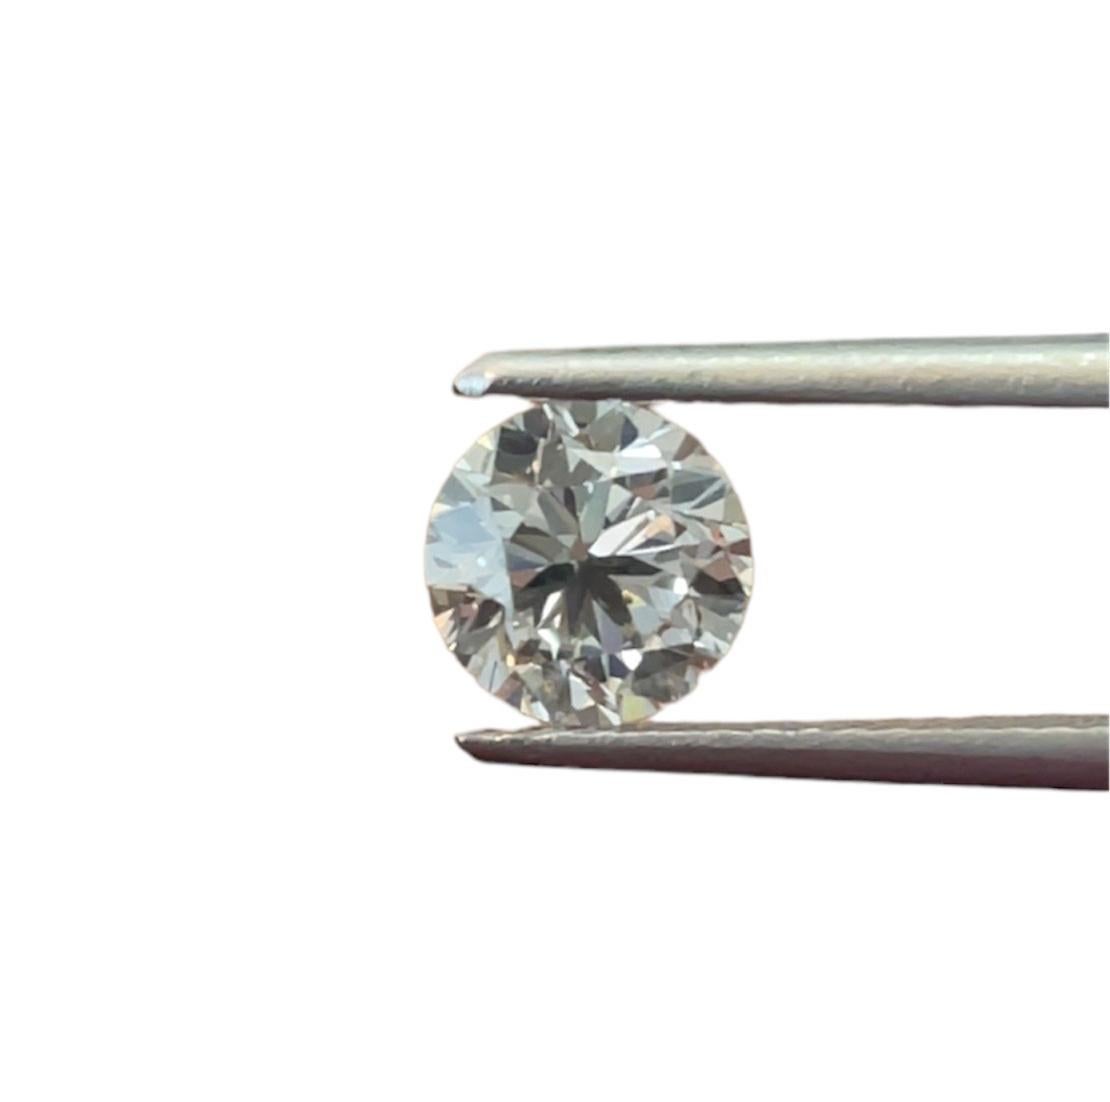 ITEM DESCRIPTION

ID #: NYC56294
Stone Shape: ROUND BRILLIANT
Diamond Weight: 1.00ct
Clarity: SI2
Color: L, Faint Brown
Cut:	Good
Measurements: 6.17 - 6.22 x 4.00 mm
Depth %:	64.6%
Table %:	56%
Symmetry: Fair
Polish: Good
Fluorescence: